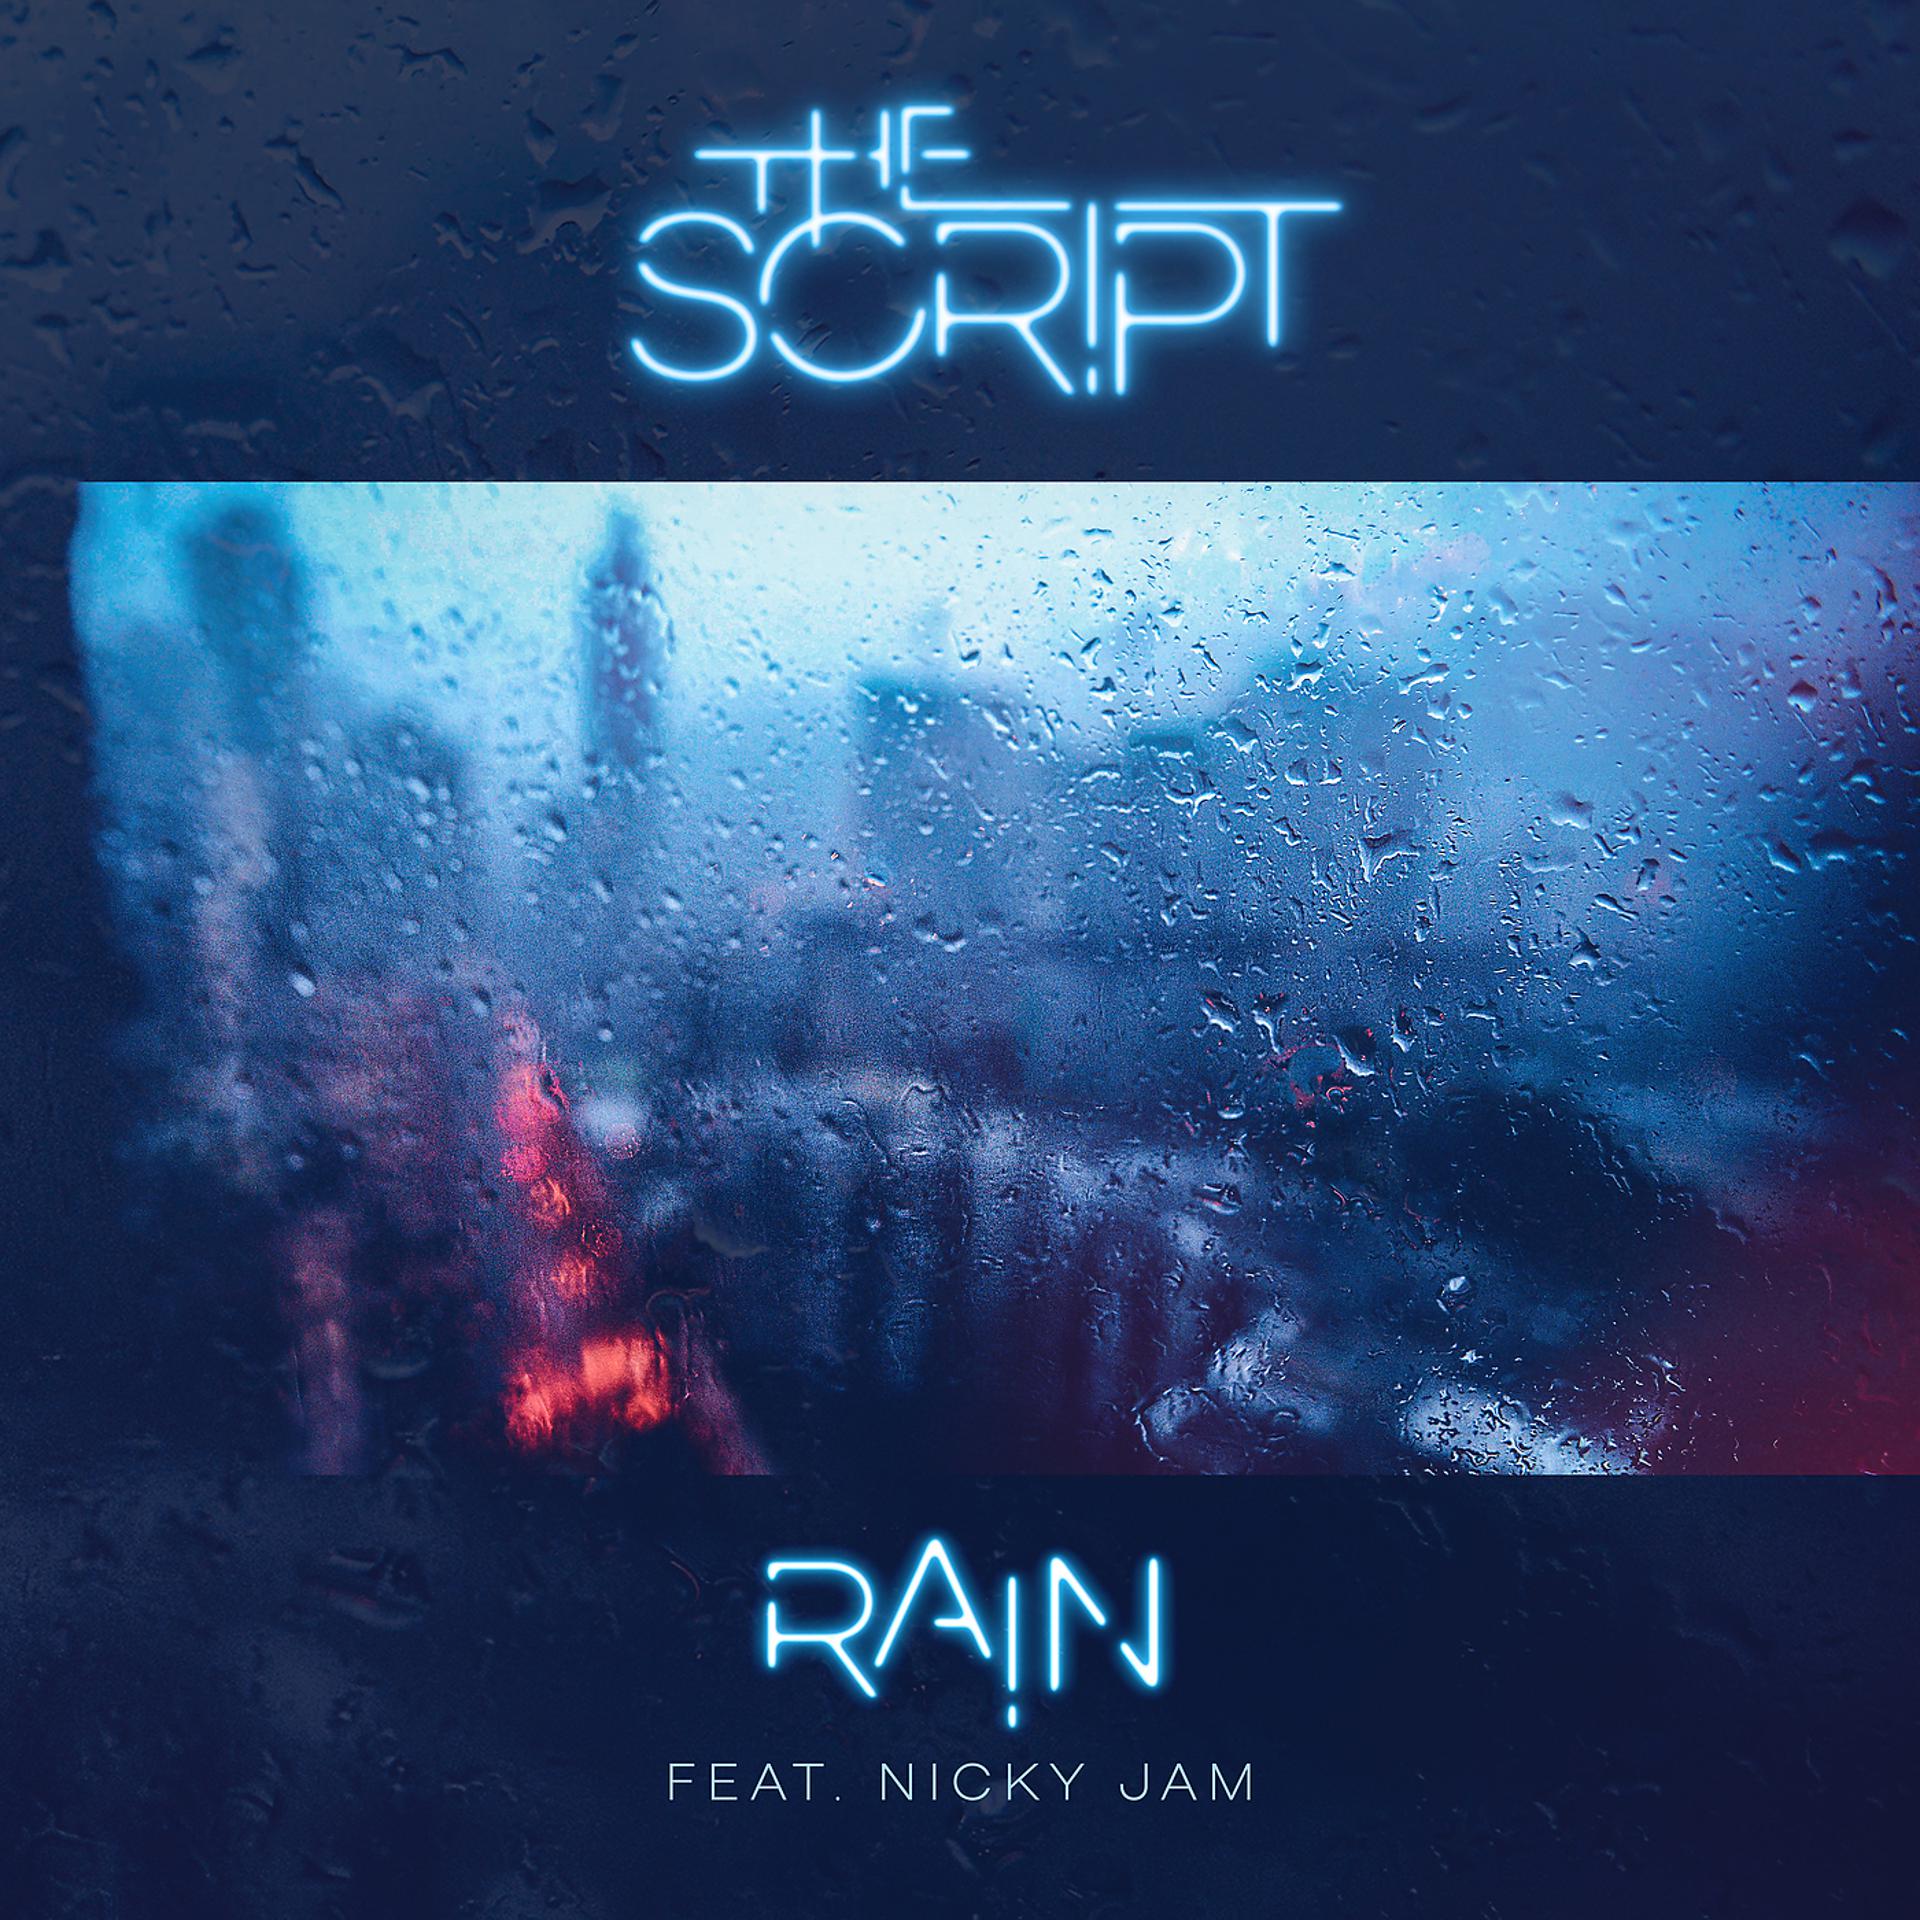 Rain ремикс. Обложки the script. The script Rain. The script альбомы. Обложка дождь.